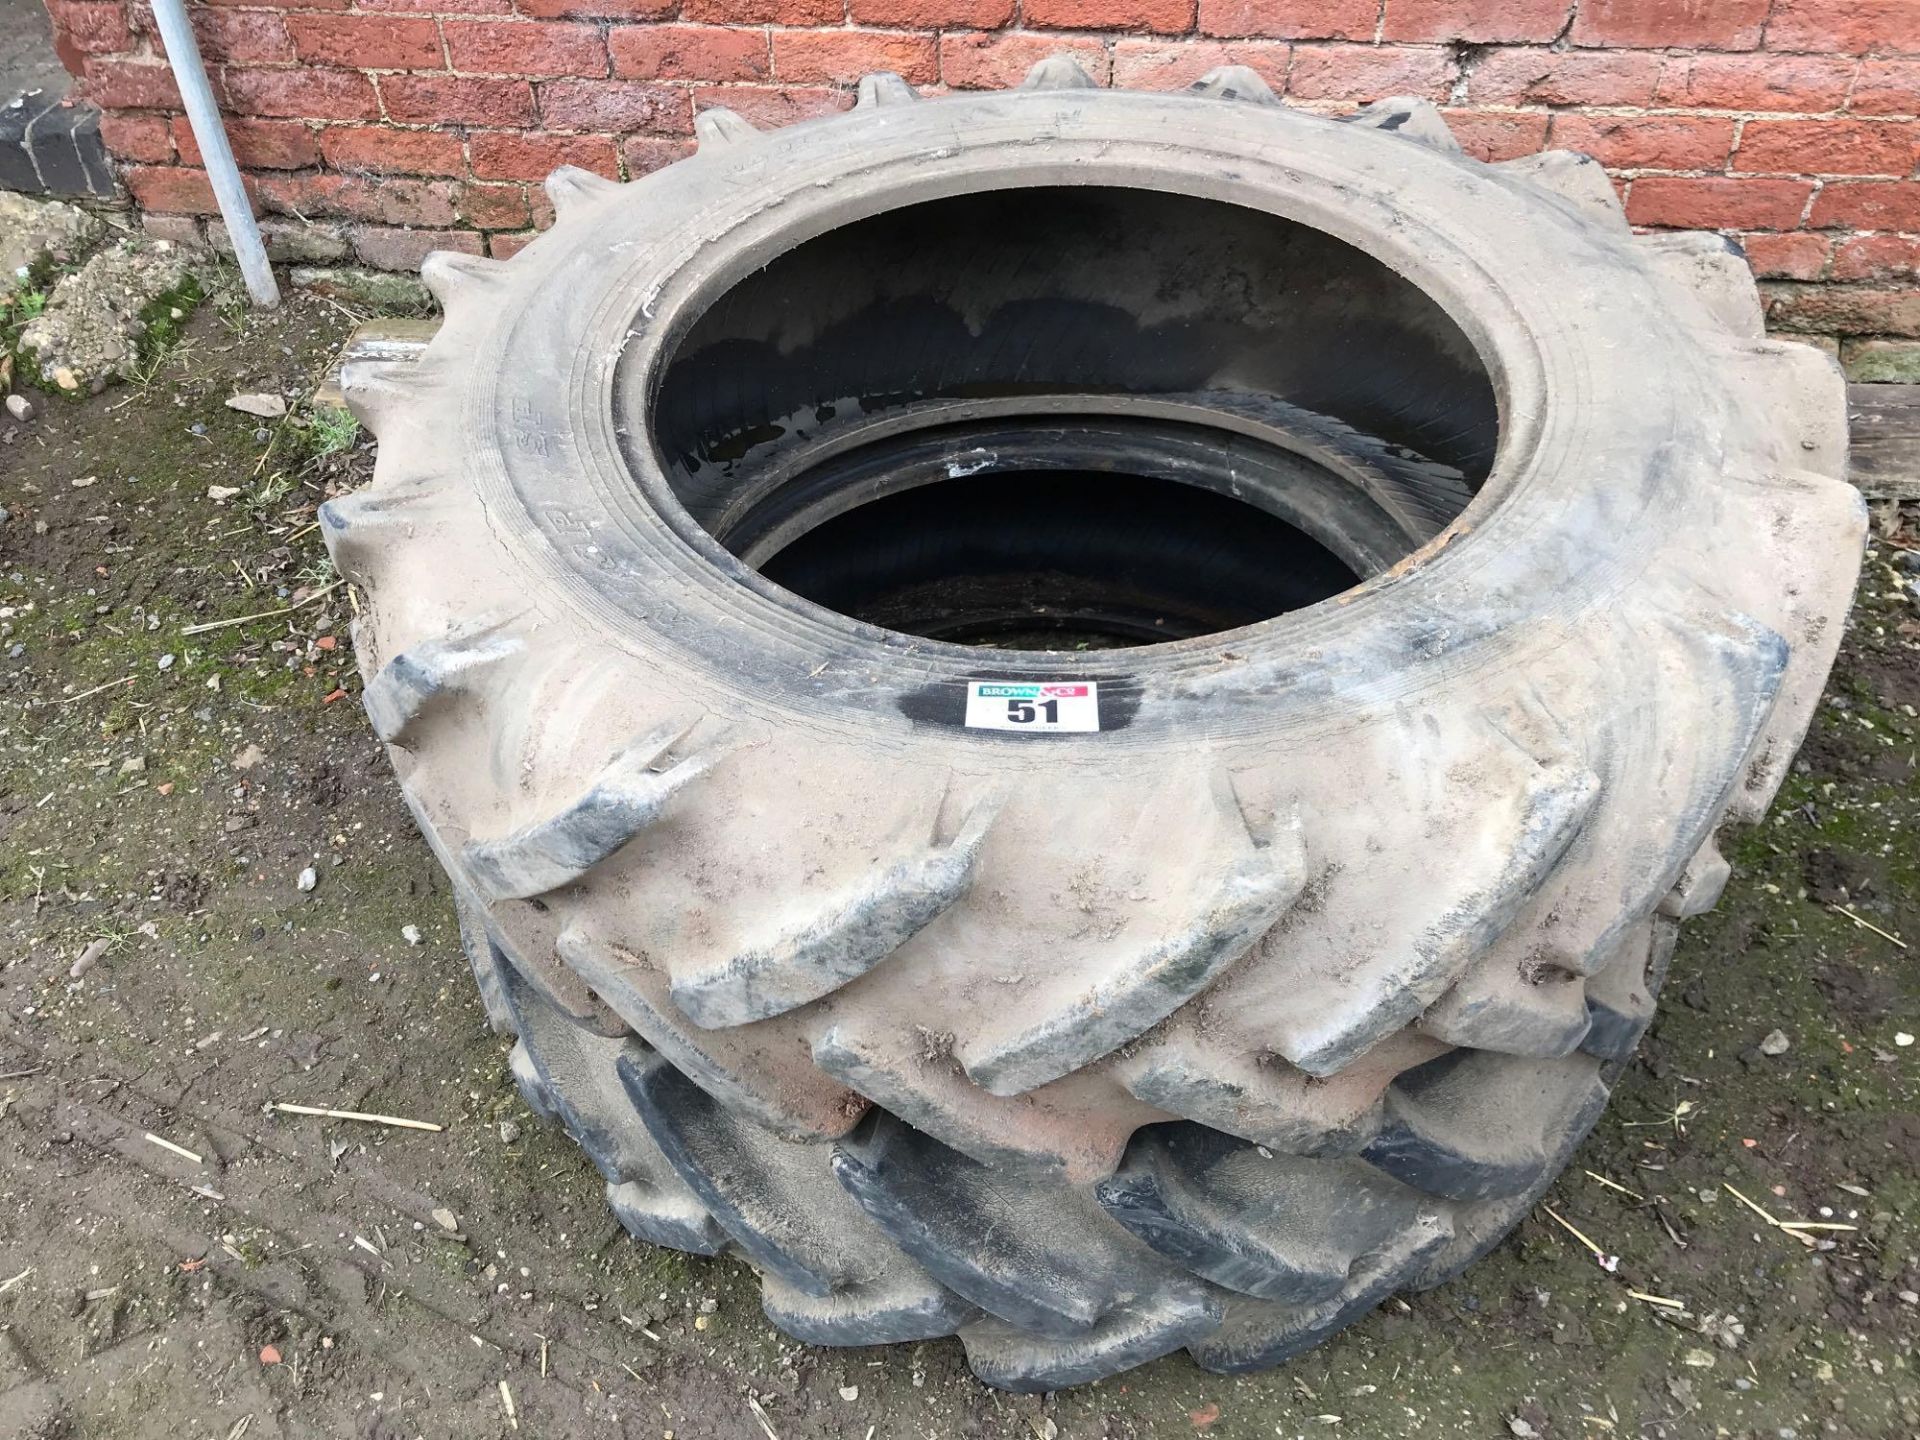 Pair of 13.6R28 tyres